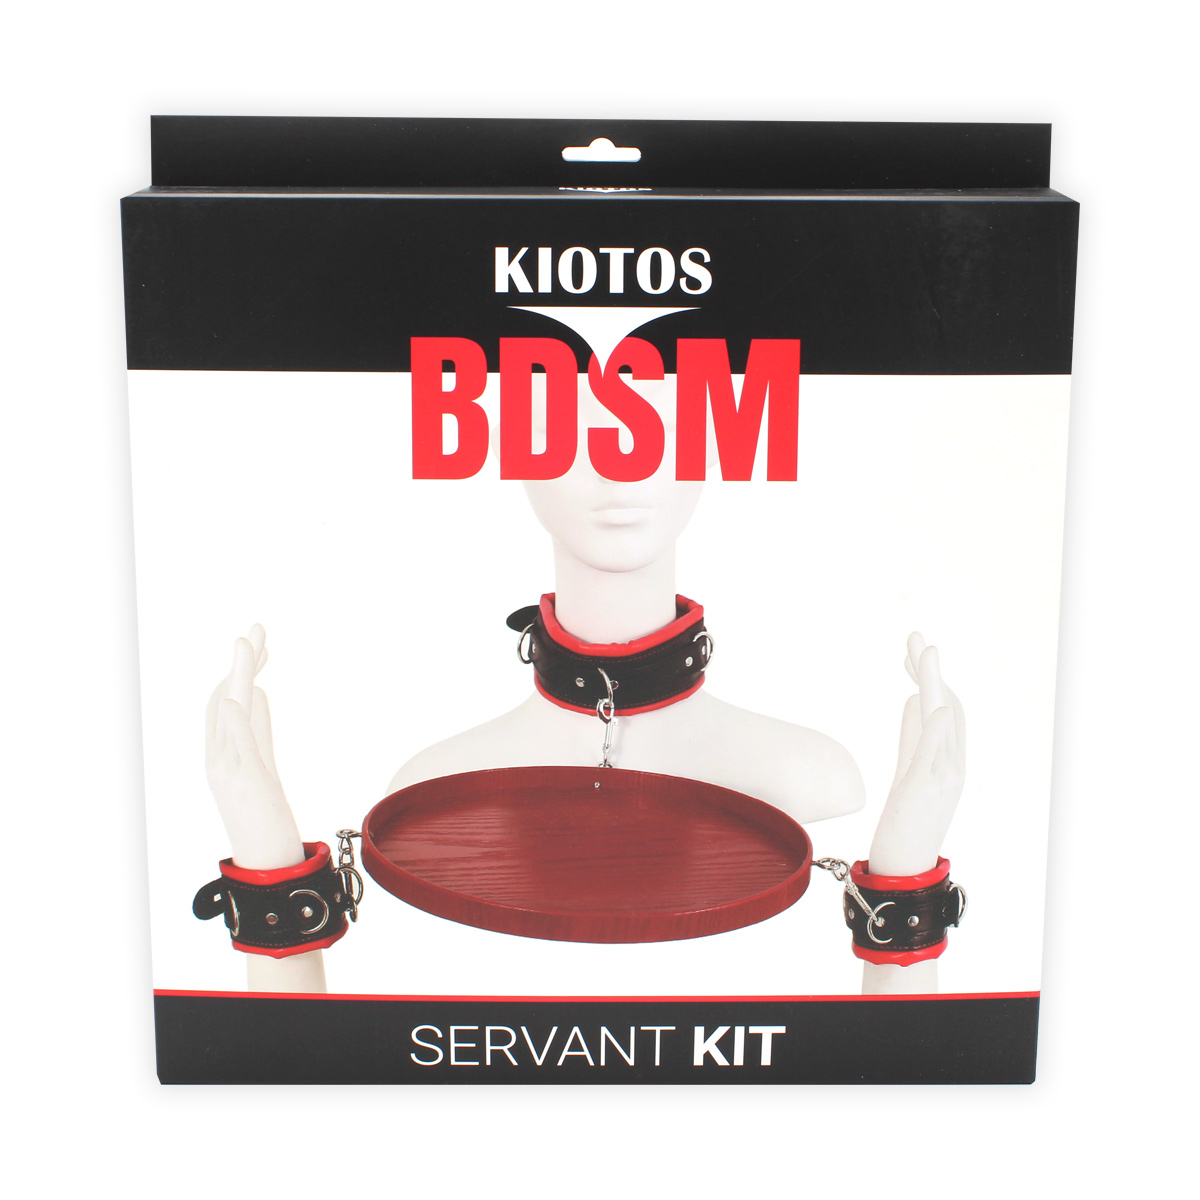 Kiotos-BDSM-Servant-Kit-OPR-321136-5